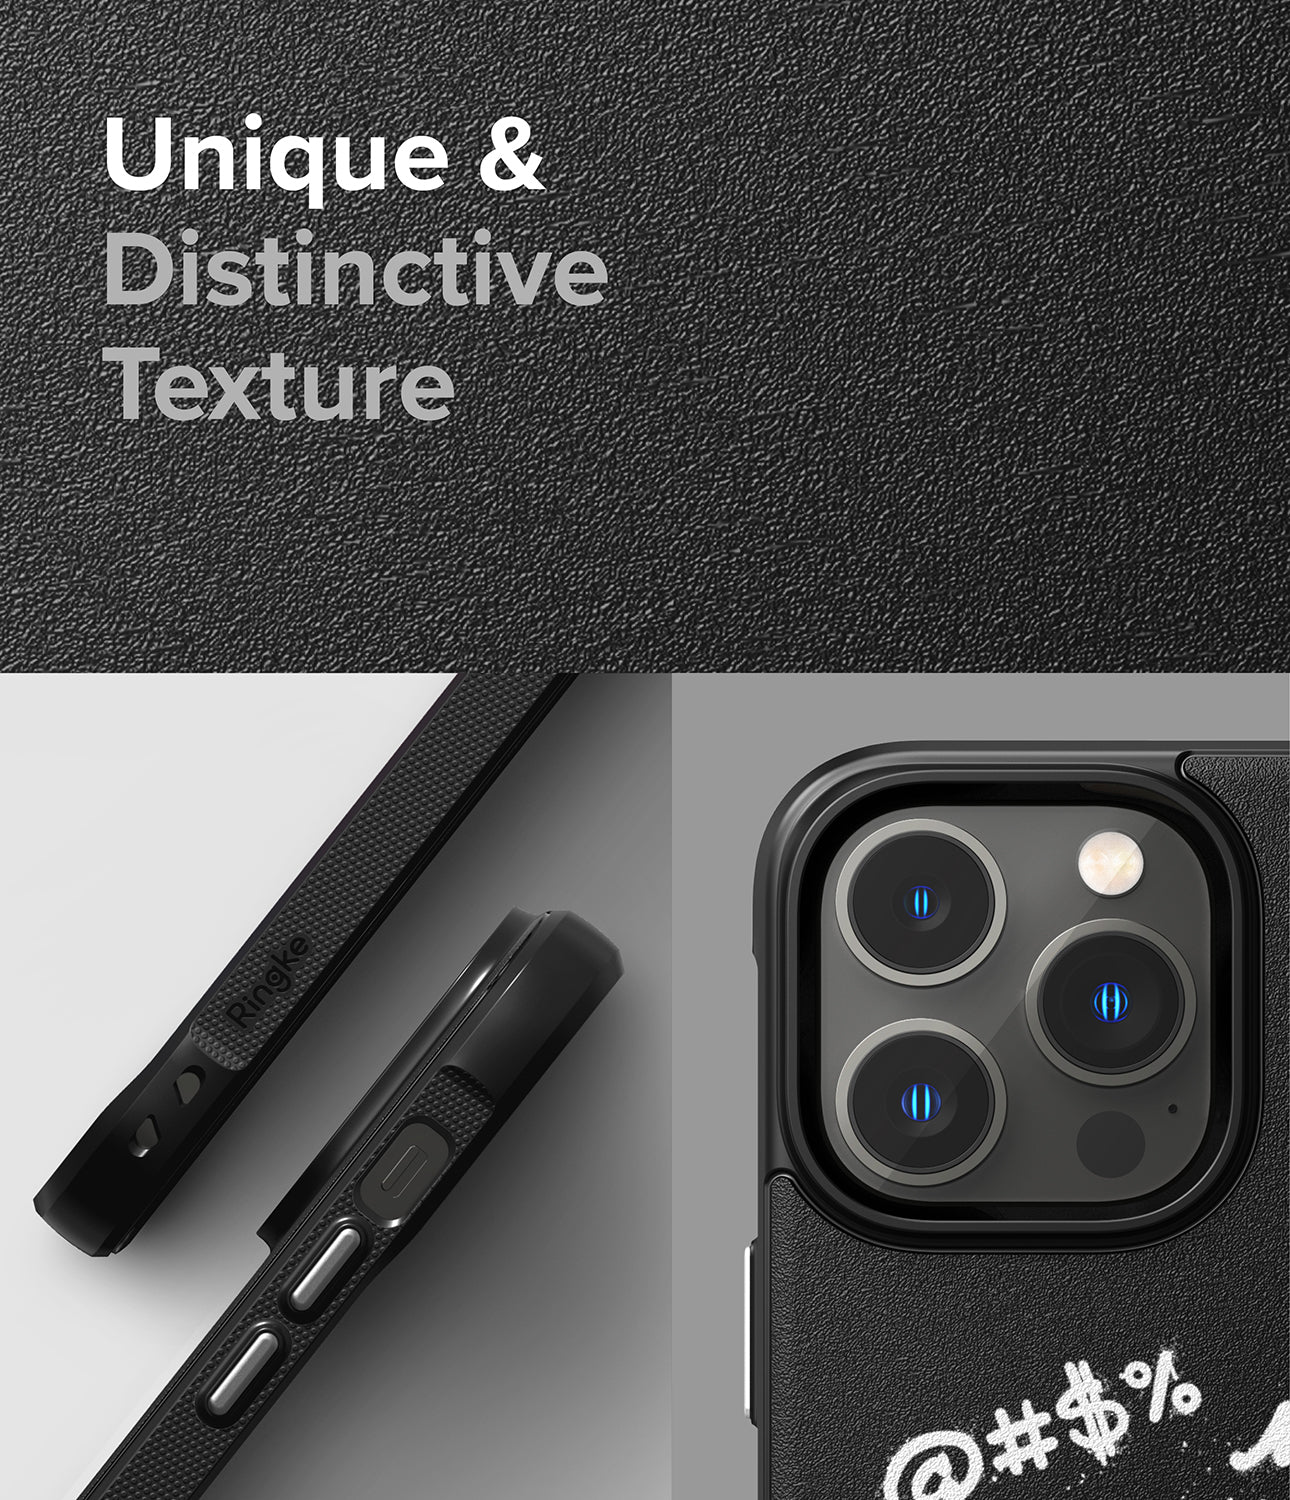 iPhone 14 Pro Max Case | Onyx Design - Unique and Distinctive Texture